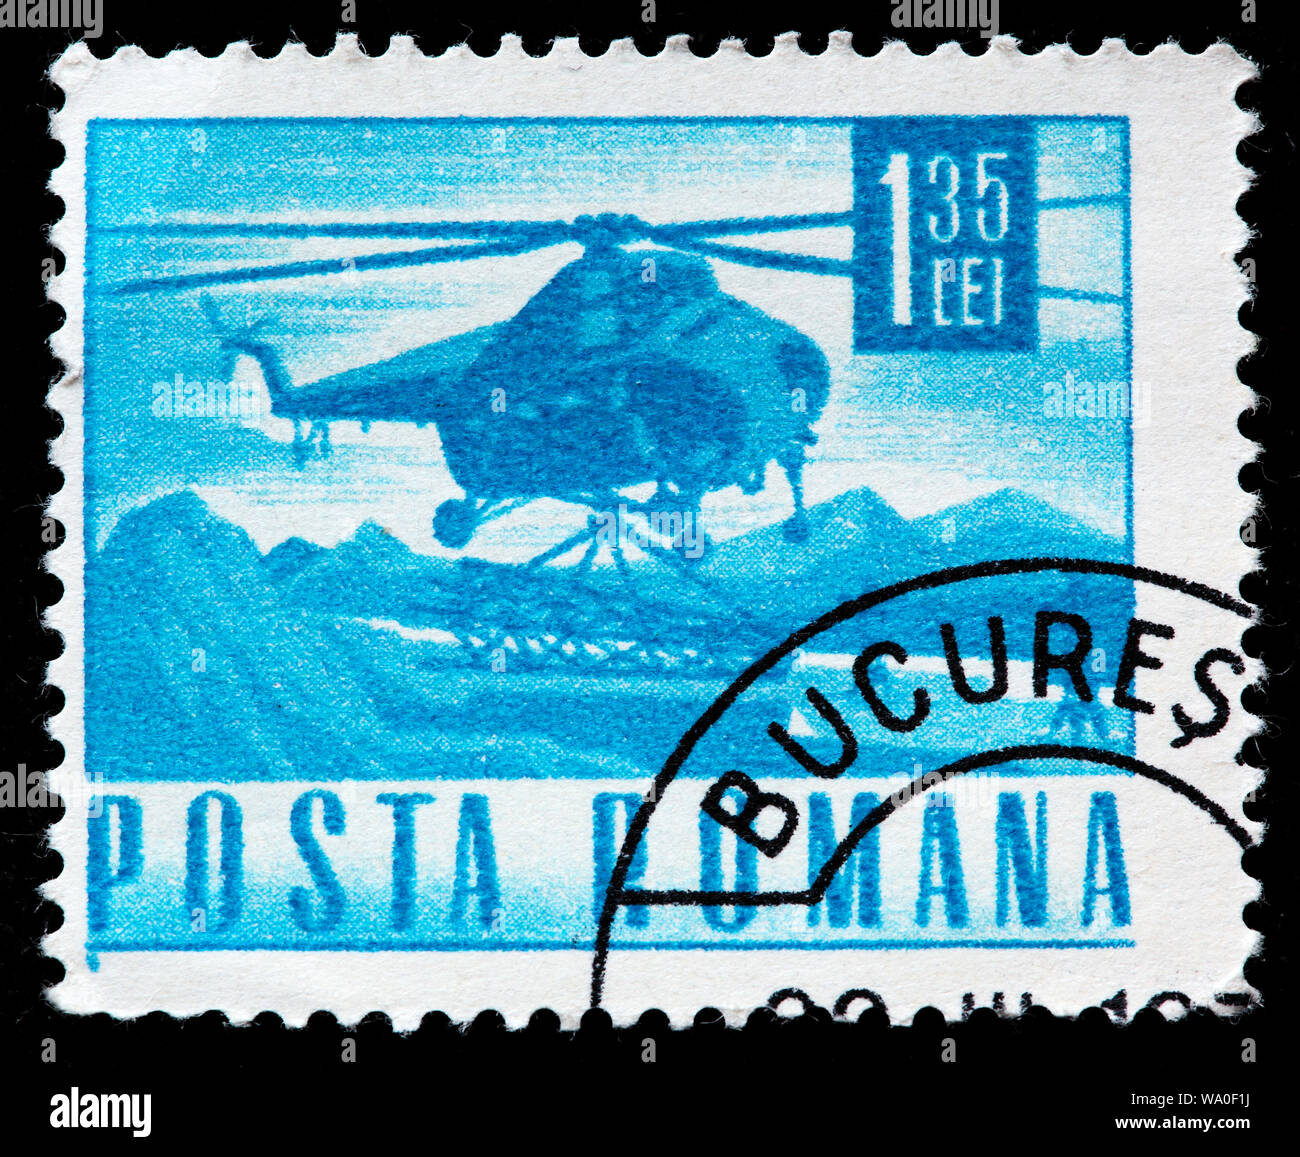 Mil Mi-3 helicopter, postage stamp, Romania, 1968 Stock Photo